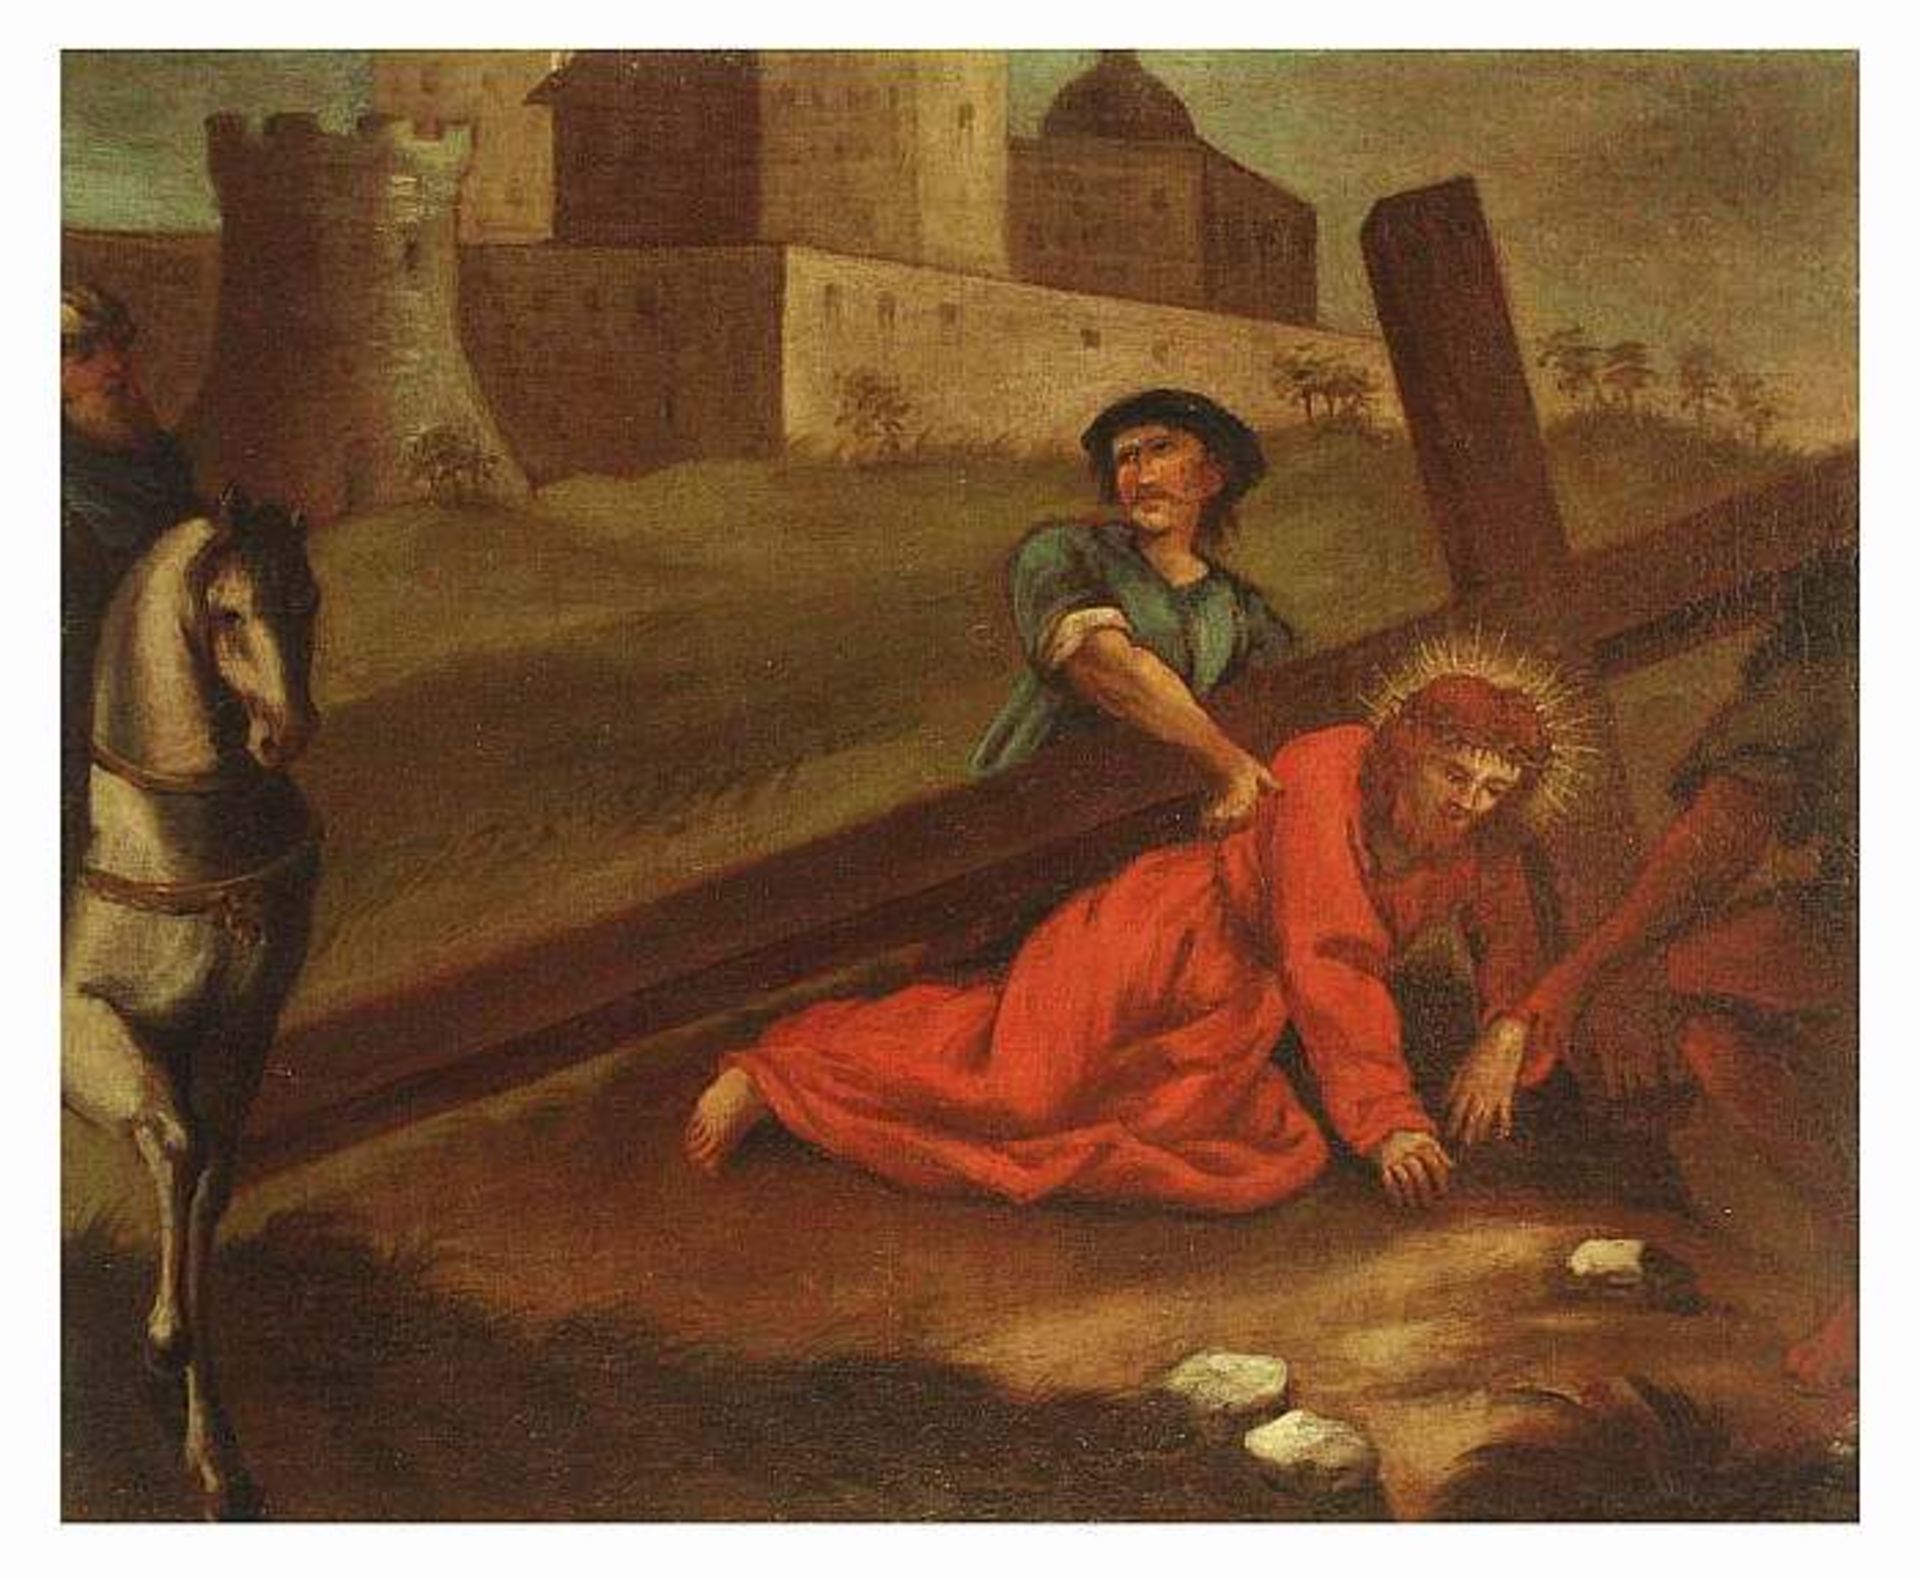 Maler des 18. Jahrhunderts. Maler des 18. Jahrhunderts. "Kreuzwegstation Nr. 3: Jesus fällt zum